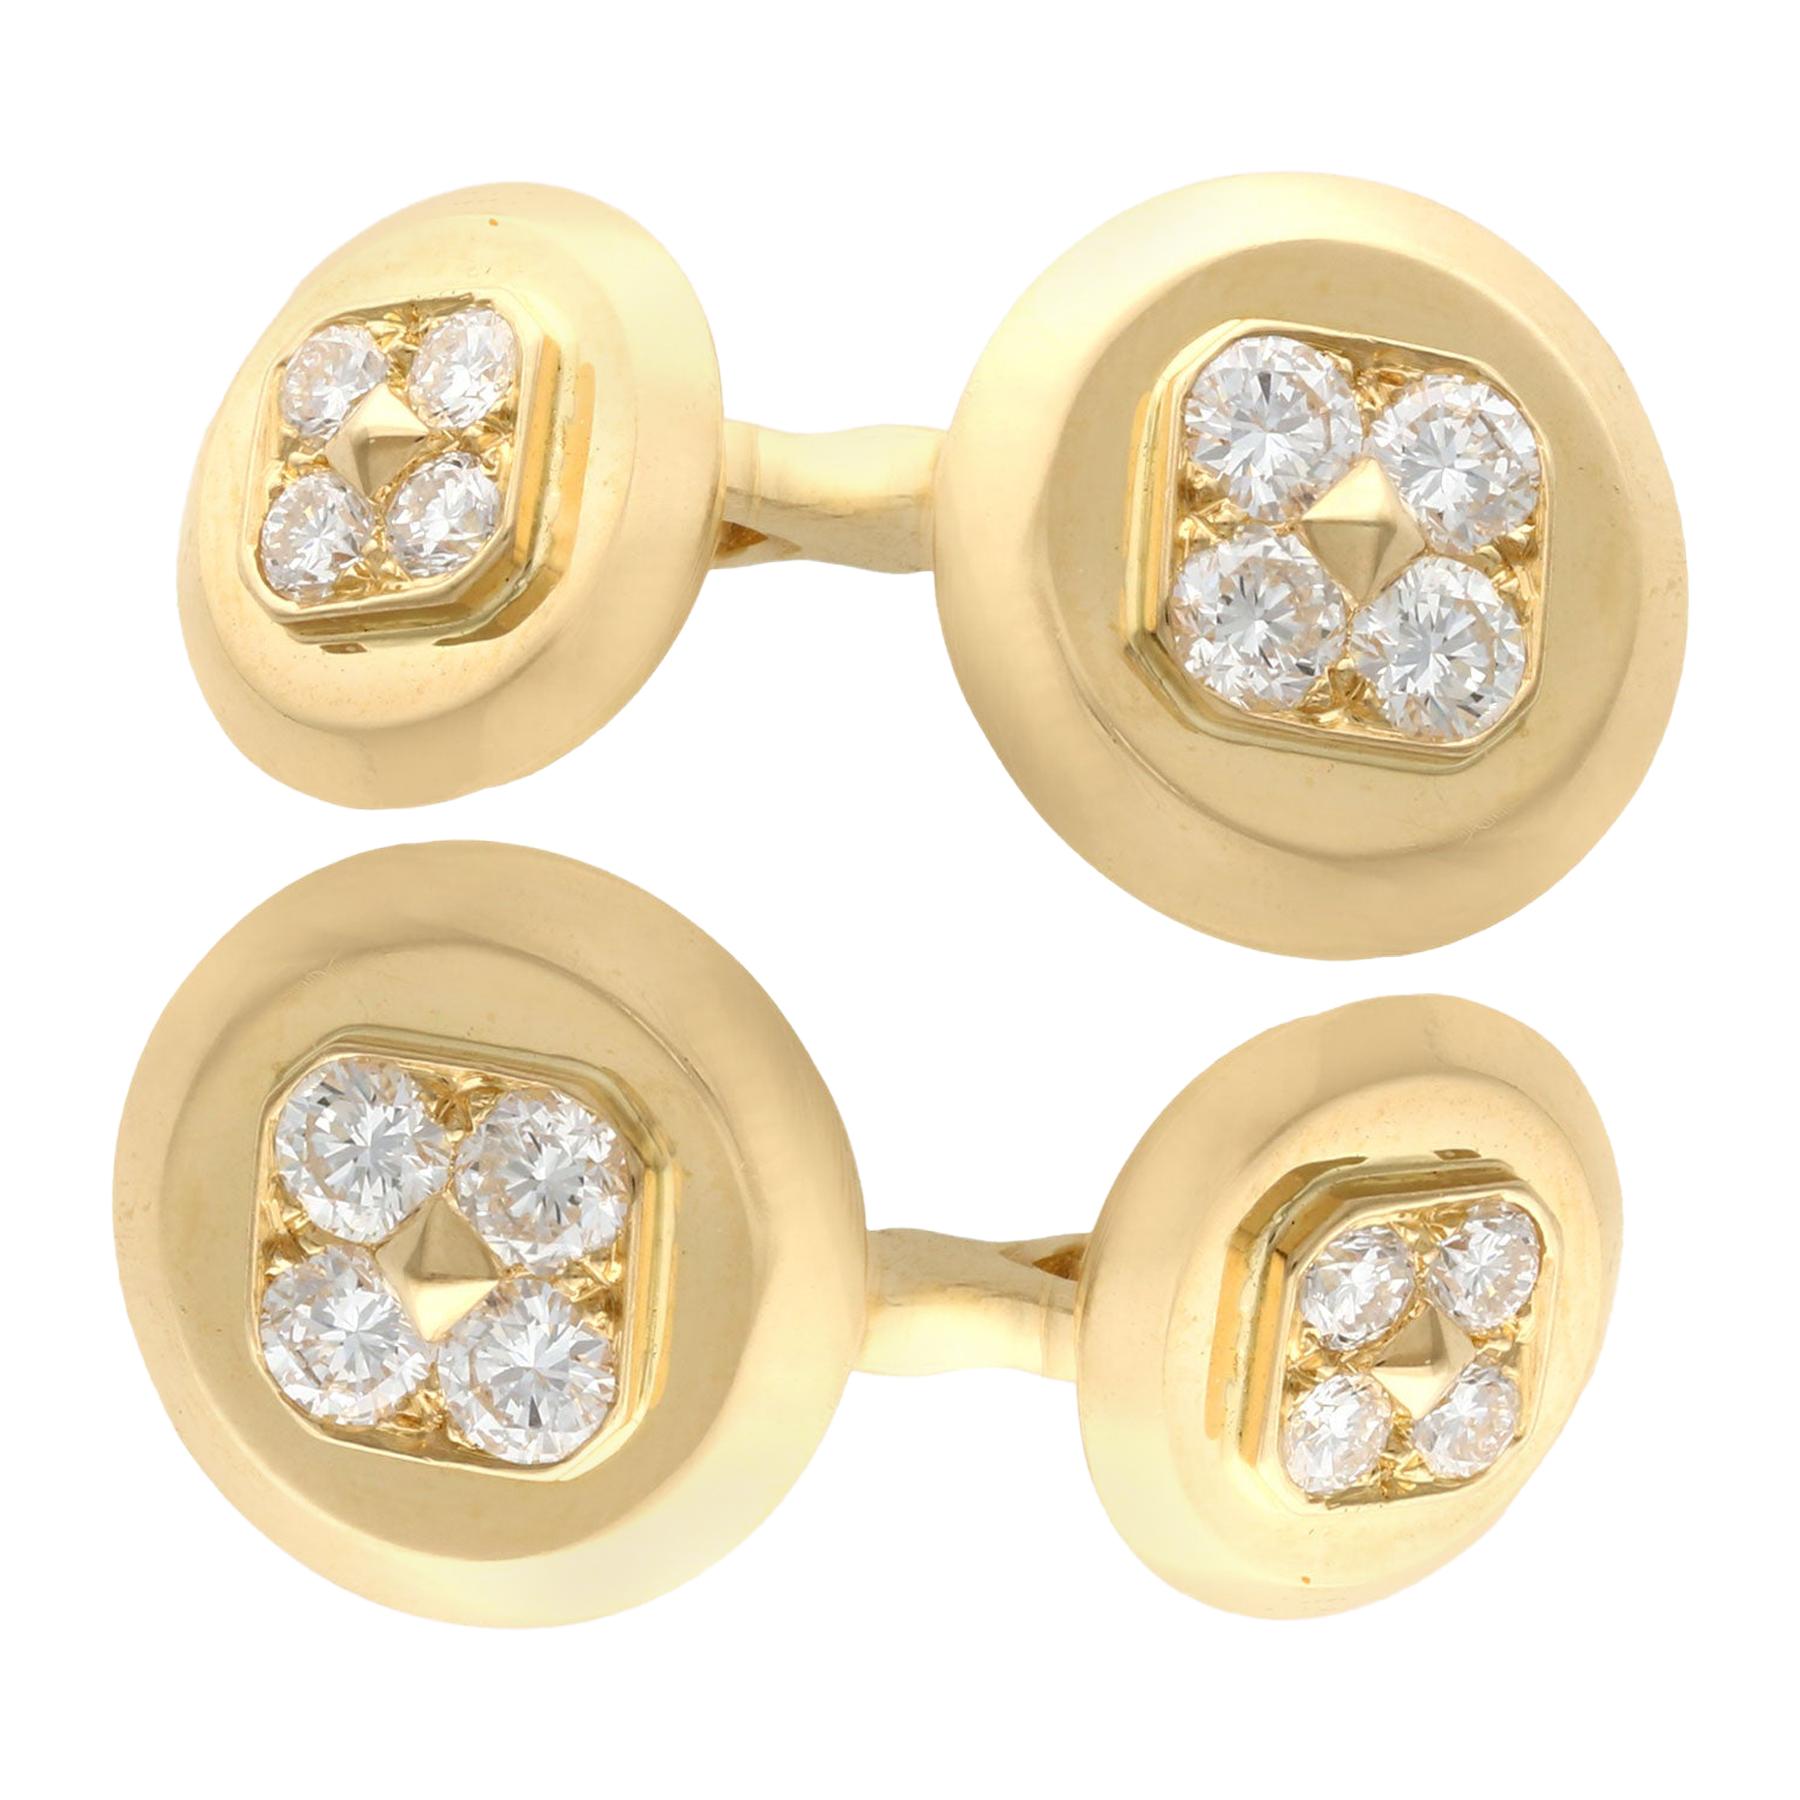 1.36 Carat Diamond and Yellow Gold Cufflinks by Cartier